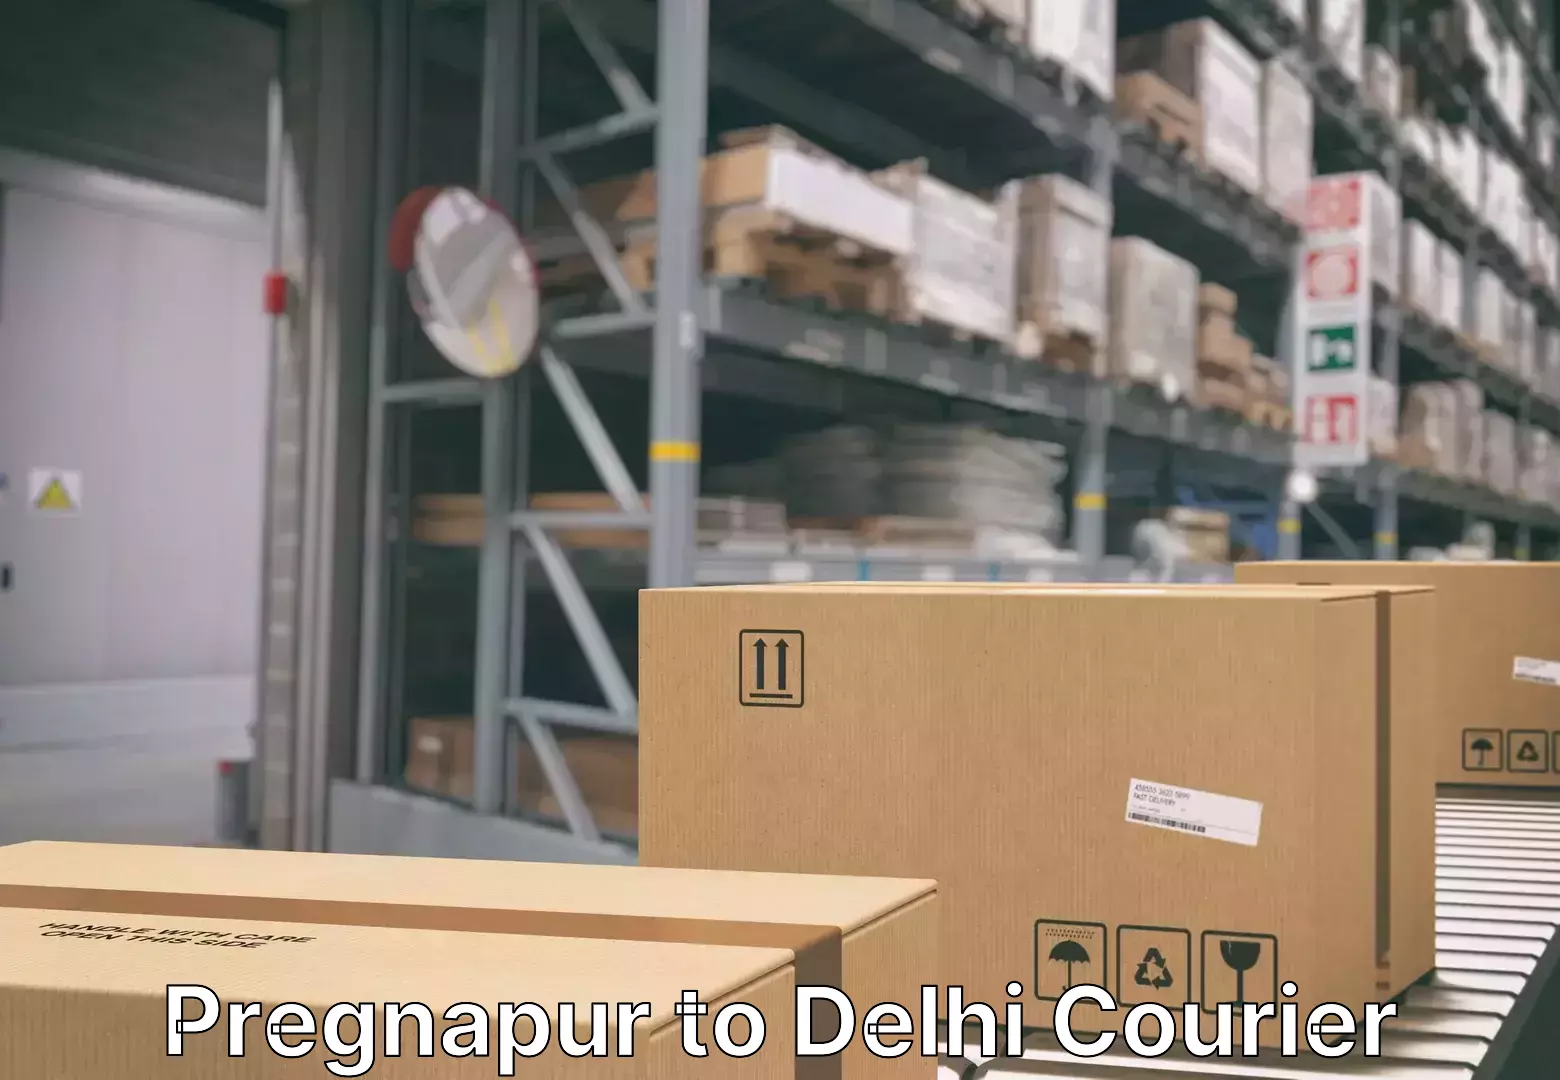 Furniture transport service Pregnapur to Delhi